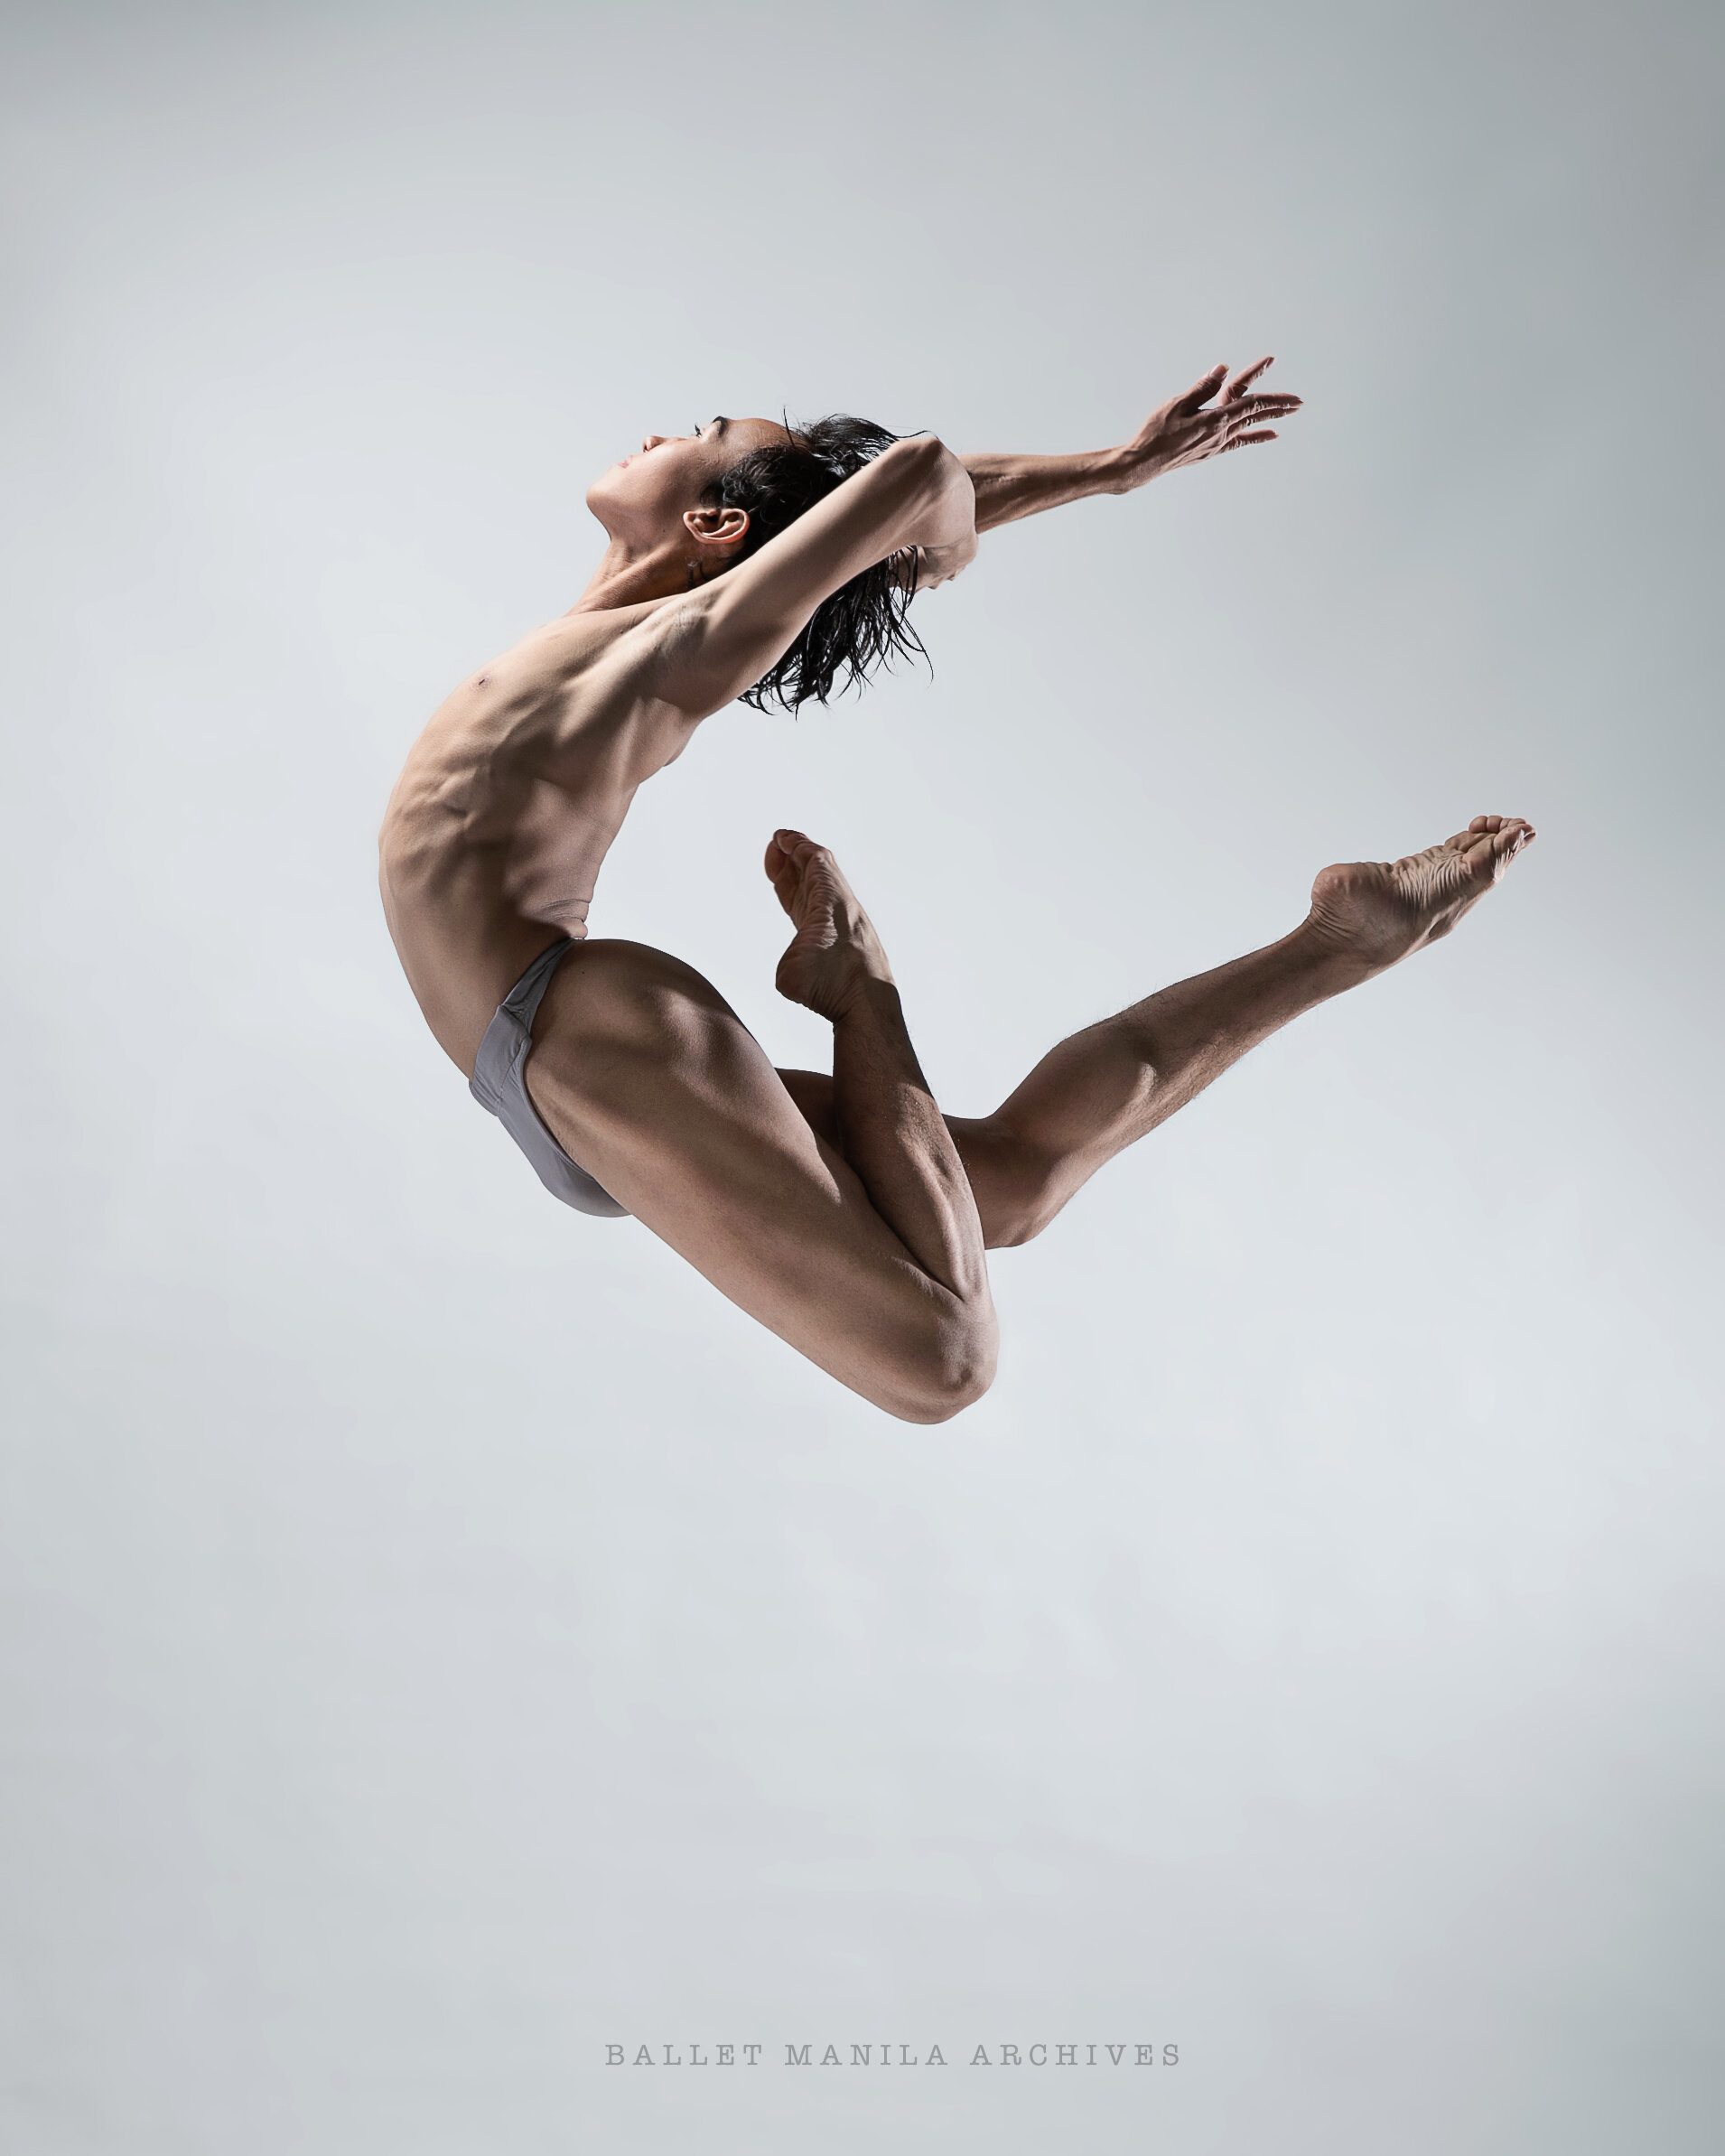 https://images.squarespace-cdn.com/content/v1/57a161b86b8f5b9351b72247/1582529059322-K9N28BYUH8FOU951PQX7/Ballet+Dictionary%3A+Dance+Belt+-+Ballet+Manila+Archives